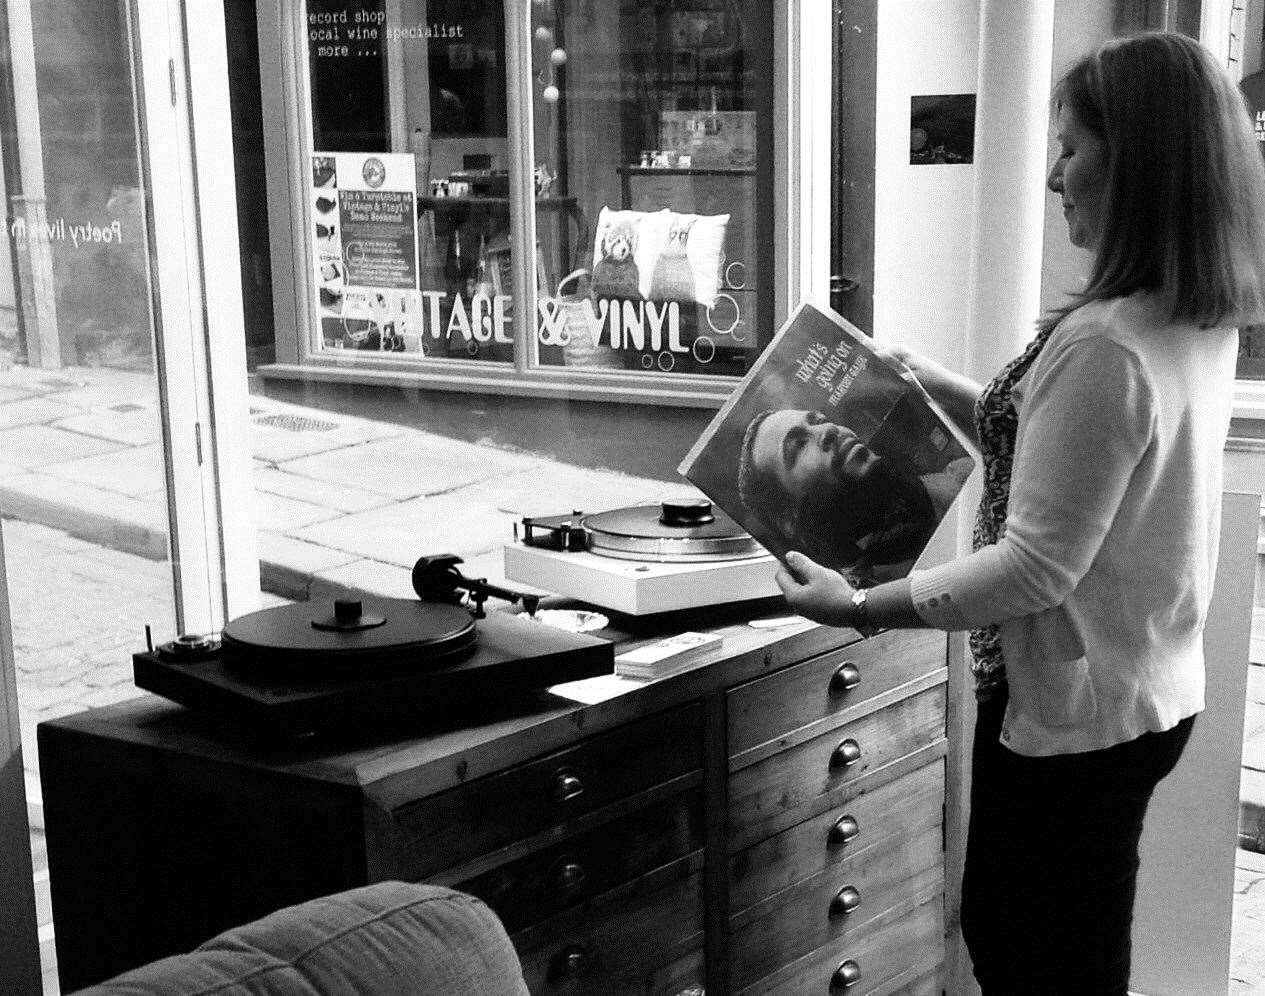 Alison Wresell runs Vintage and Vinyl in Folkestone